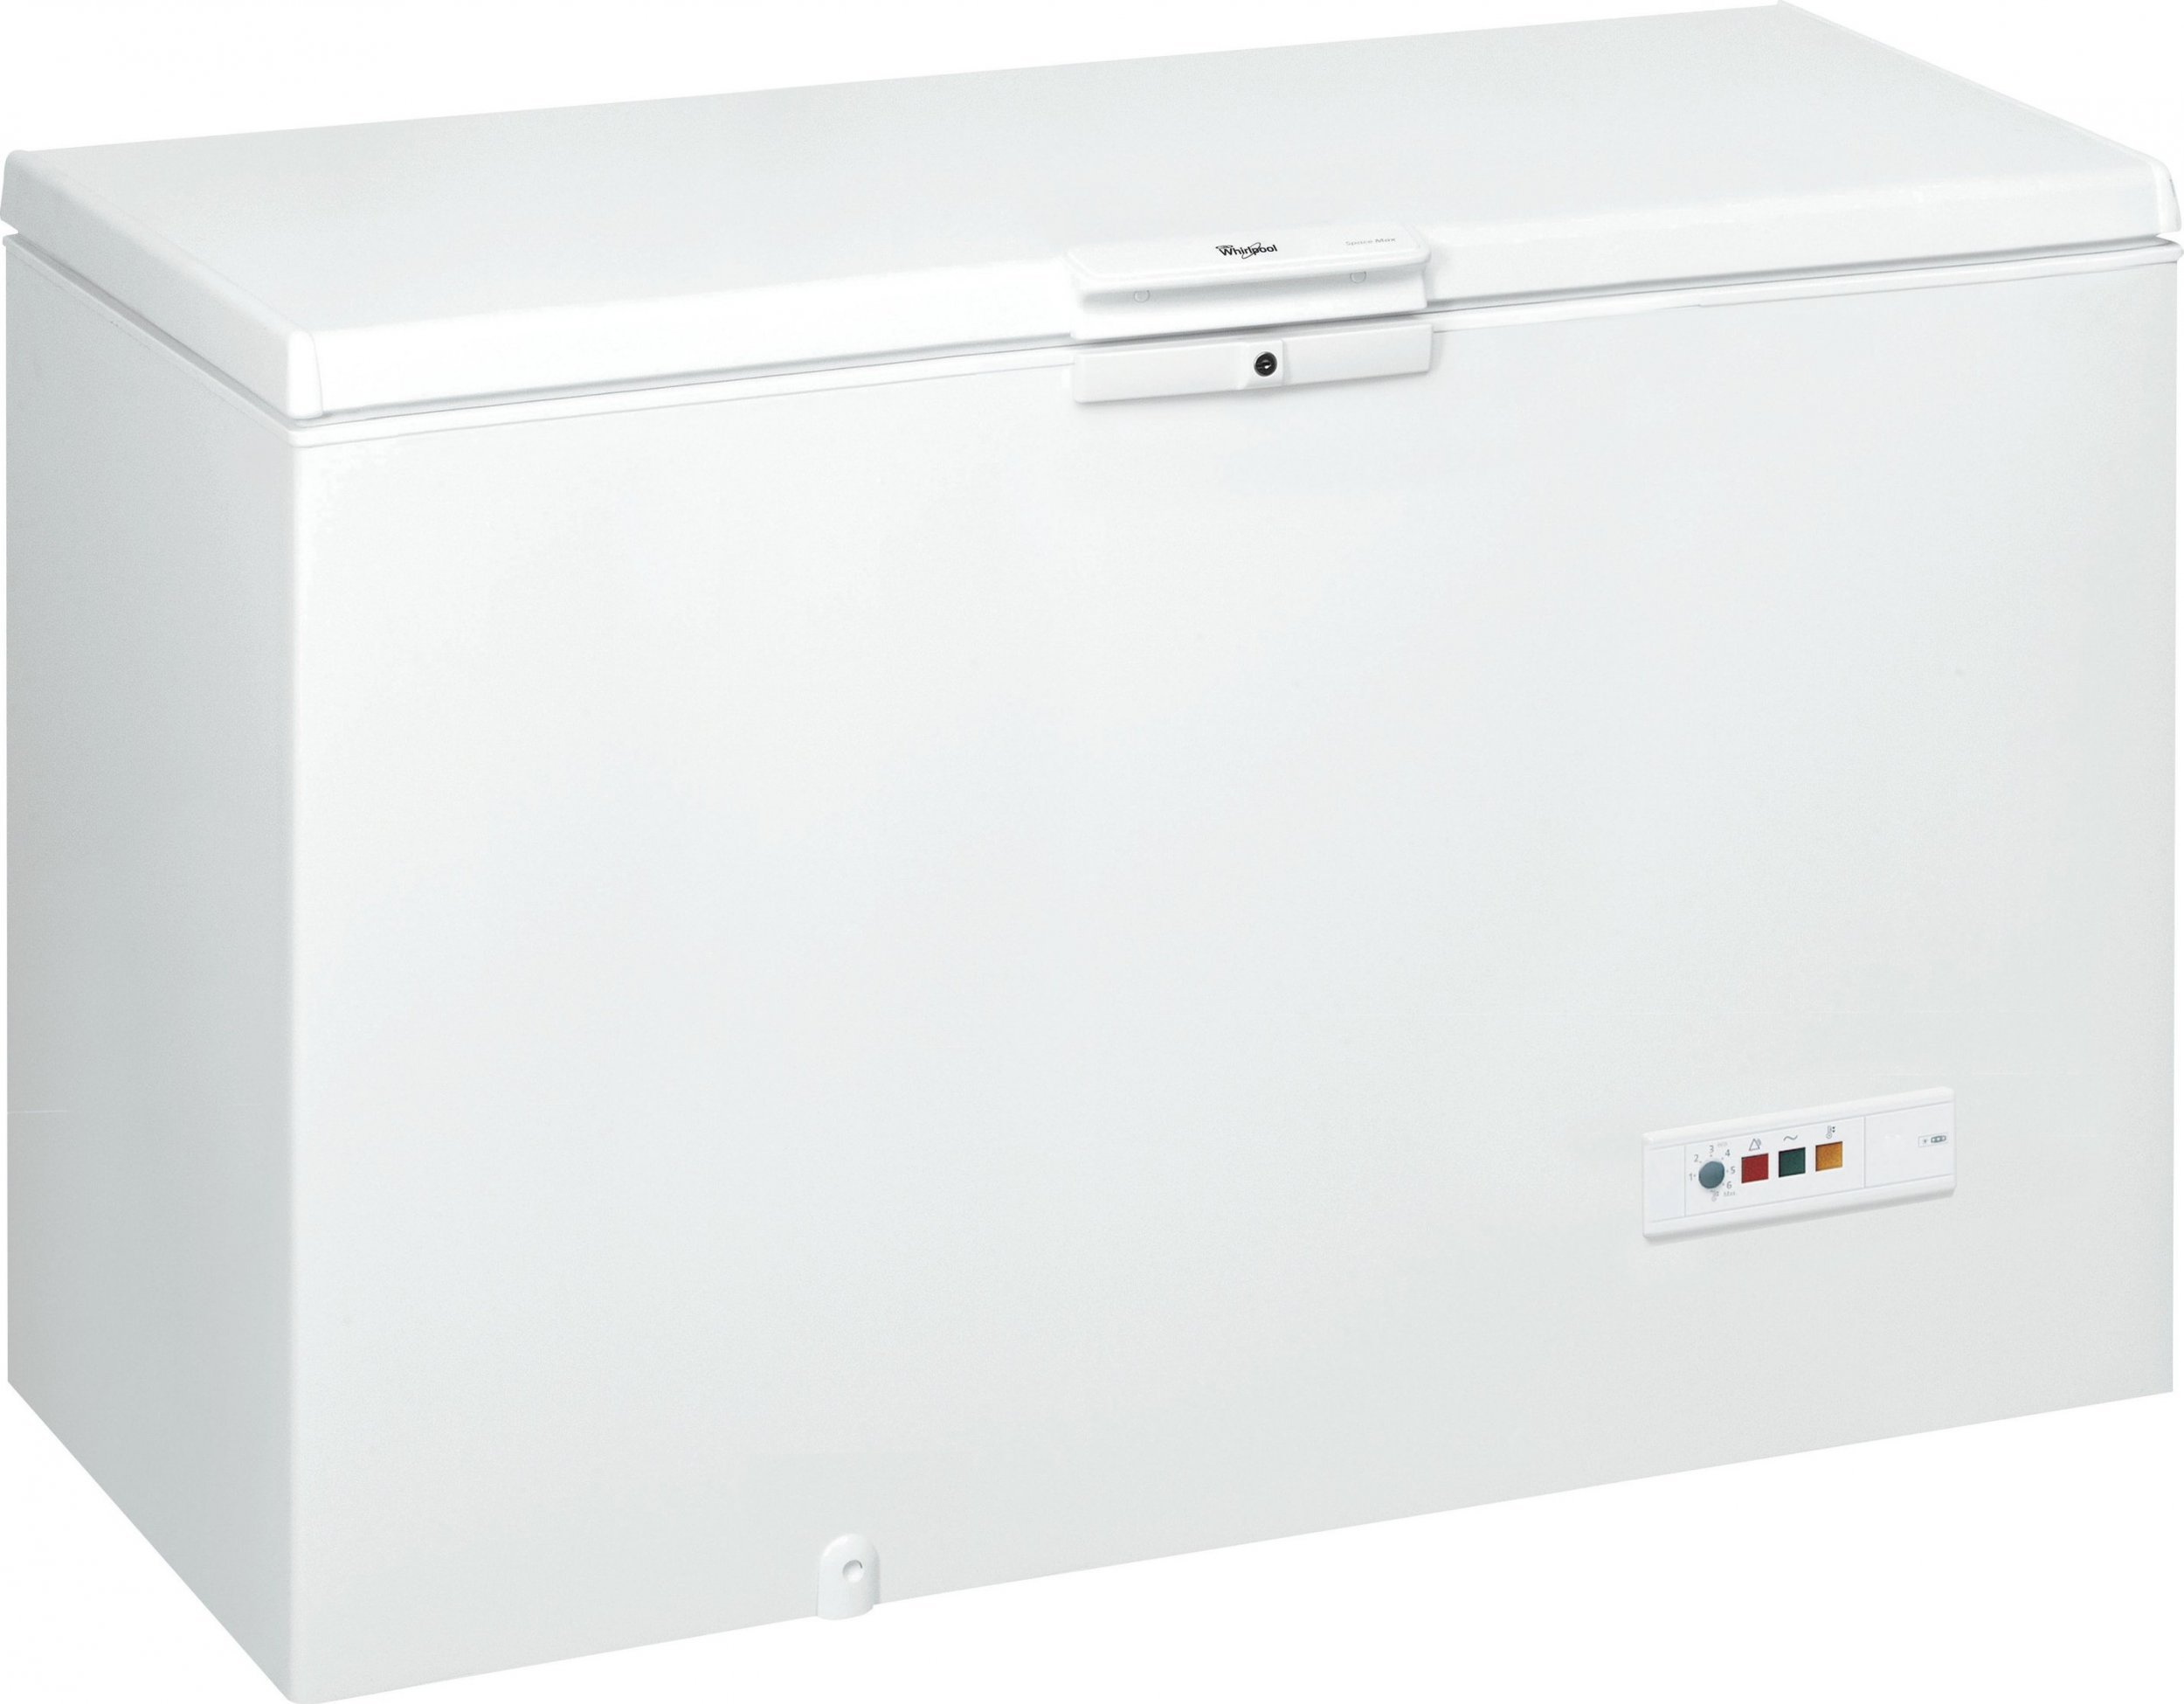 Lazi frigorifice - Lada frigorifica Whirlpool ACO432,437 l,42 dB,alb